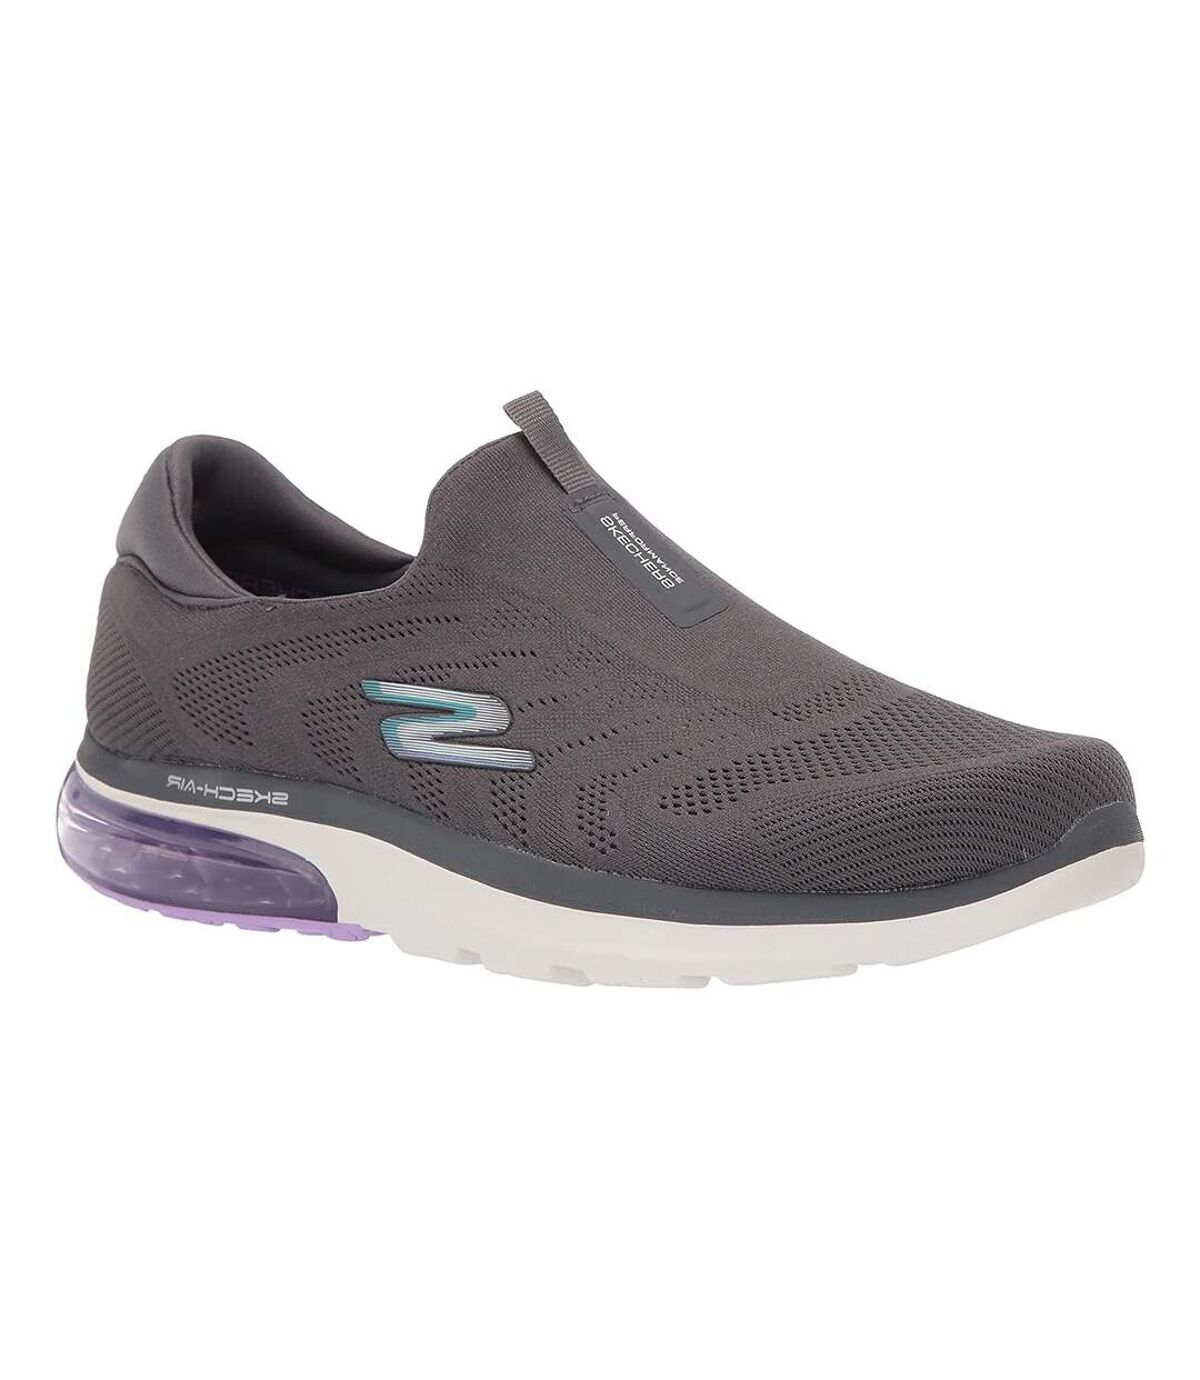 Skechers Womens/Ladies Go Walk Air 2.0 Shoes (Charcoal/Multicolored) - UTFS8320